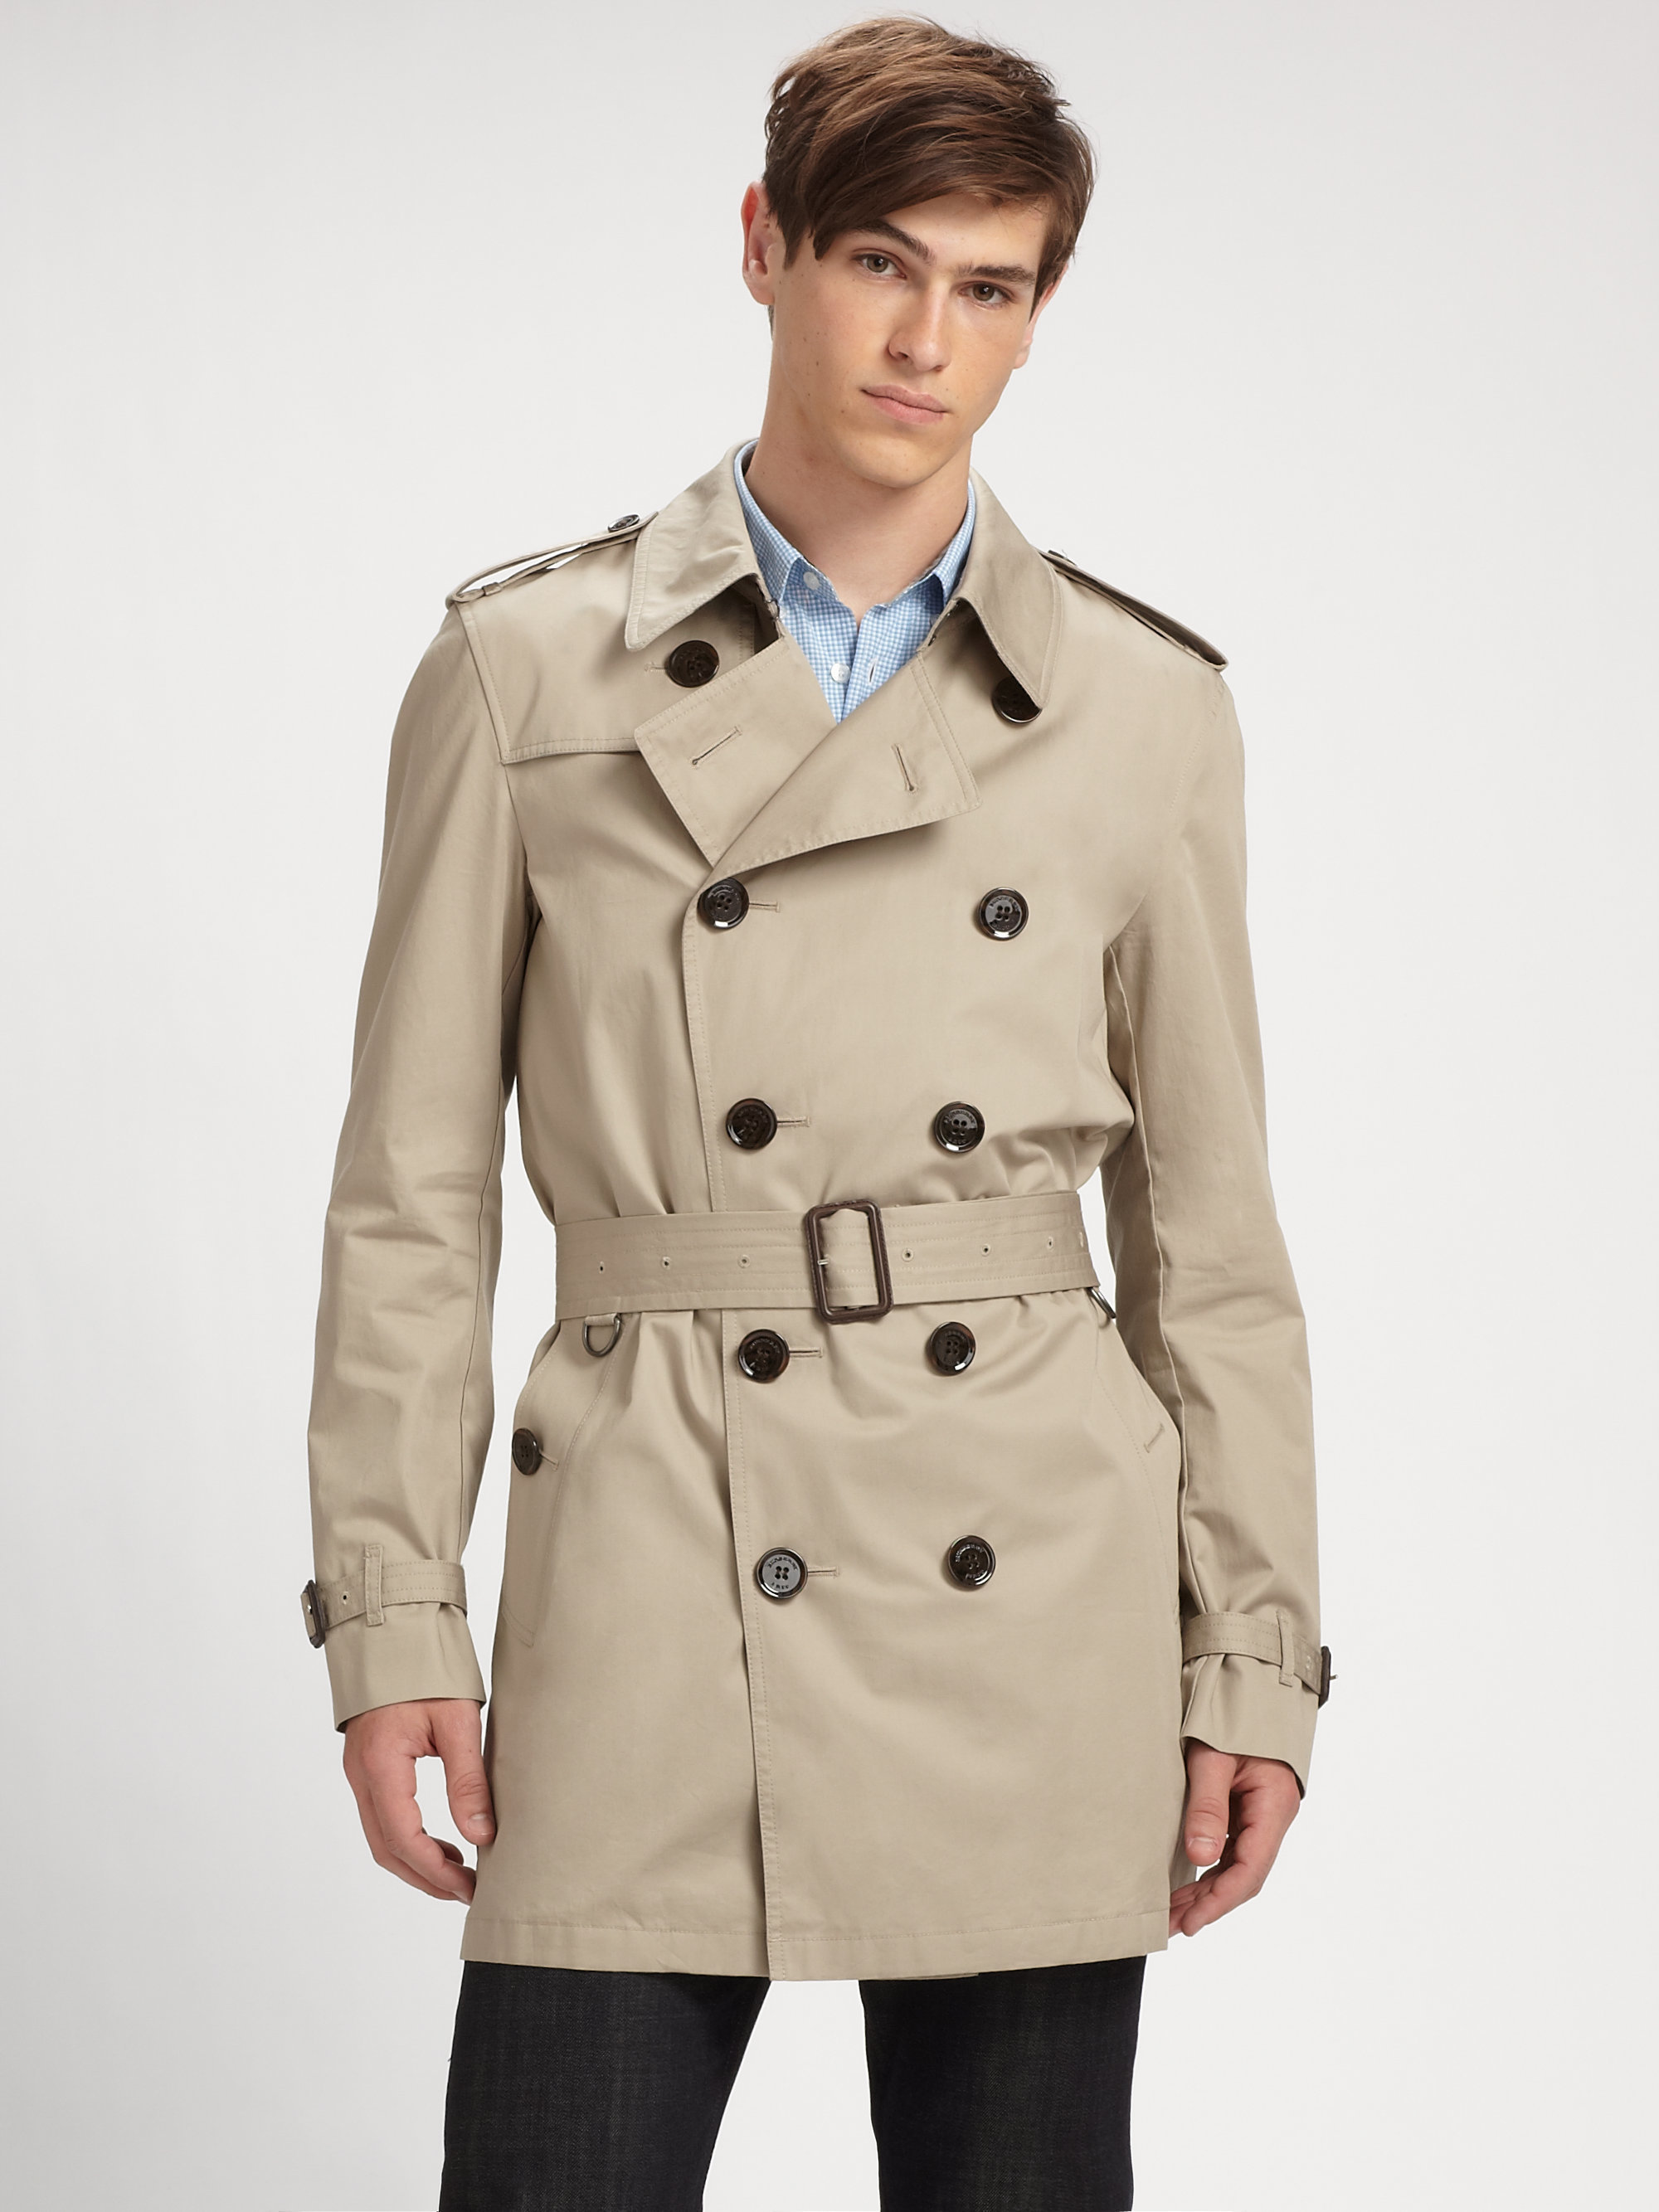 beige trench coat men's outfit